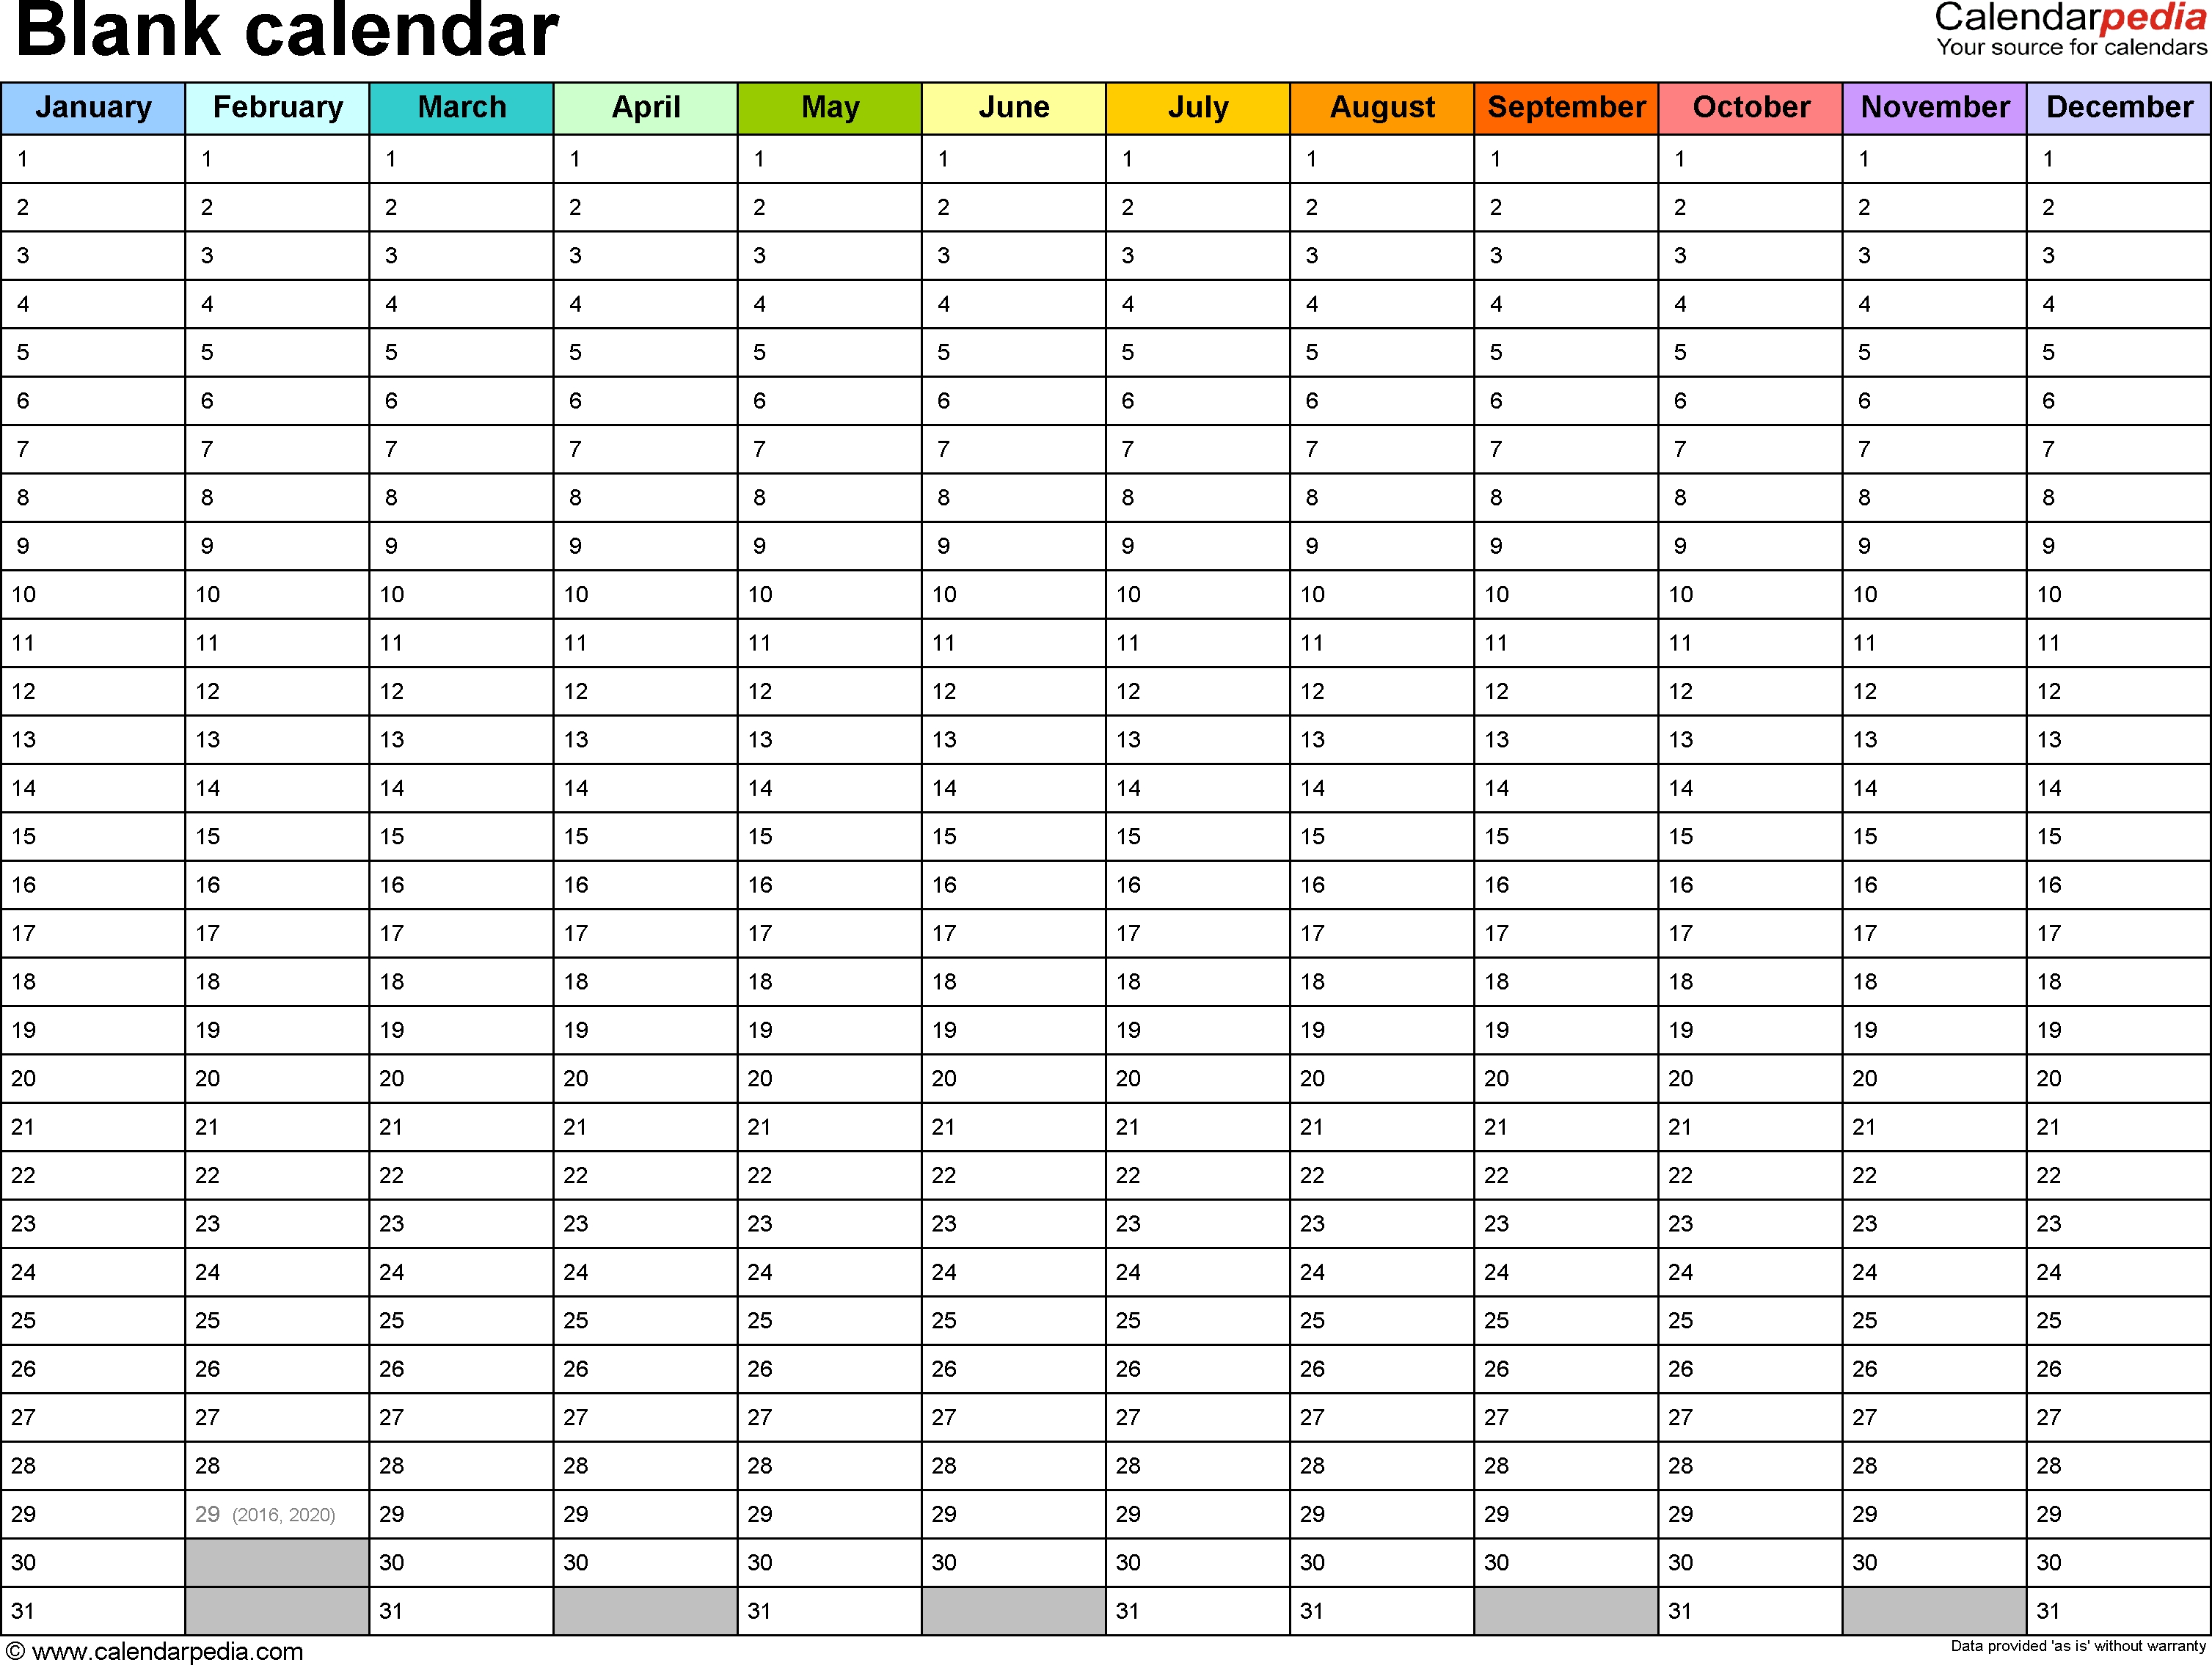 Blank Calendar - 9 Free Printable Microsoft Word Templates Calendar Template Any Year